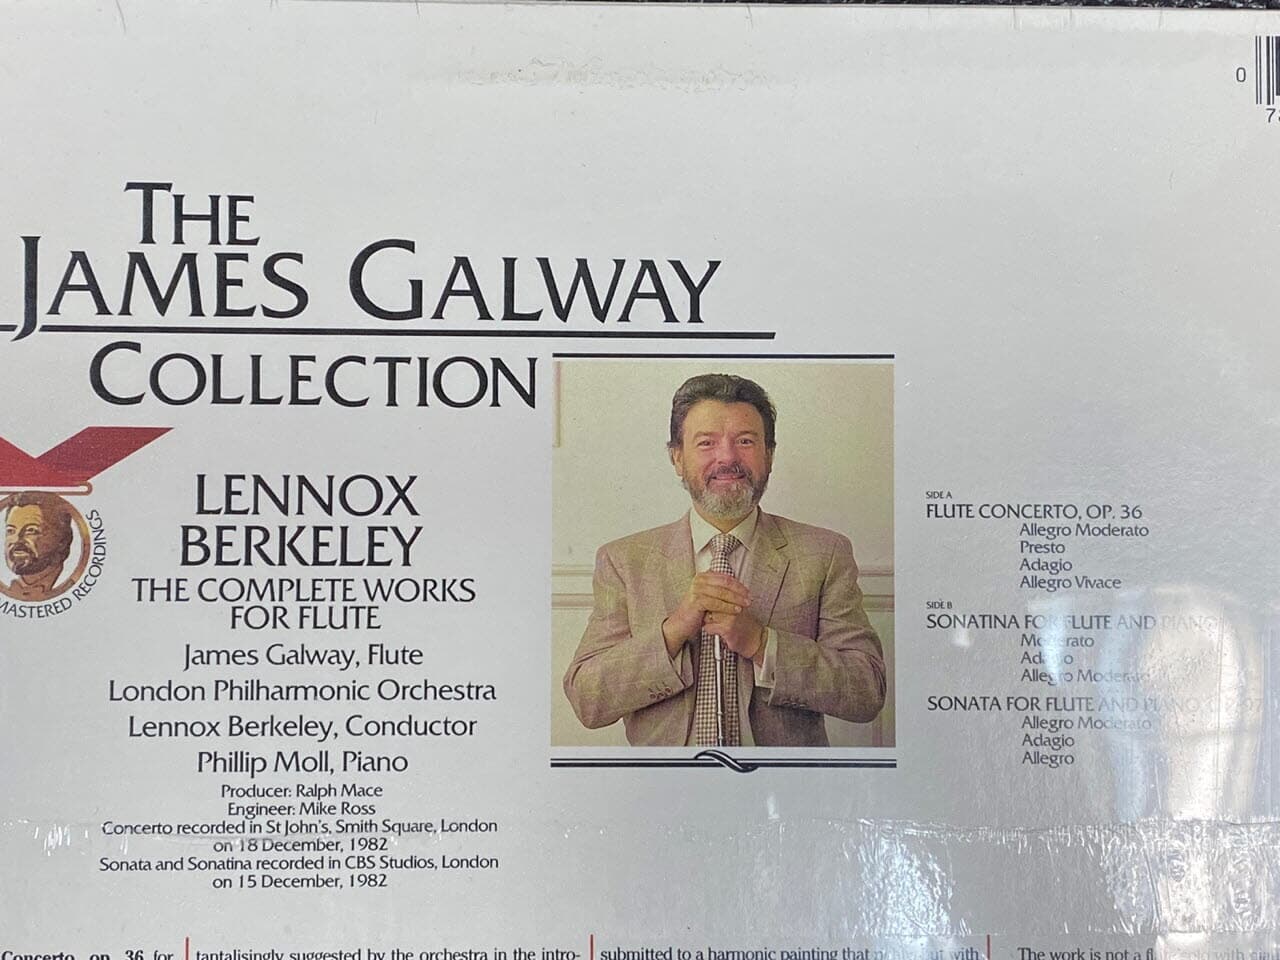 [LP] 제임스 골웨이 - James Galway - Lennox Berkeley Complete Works For Flute LP [U.S반]